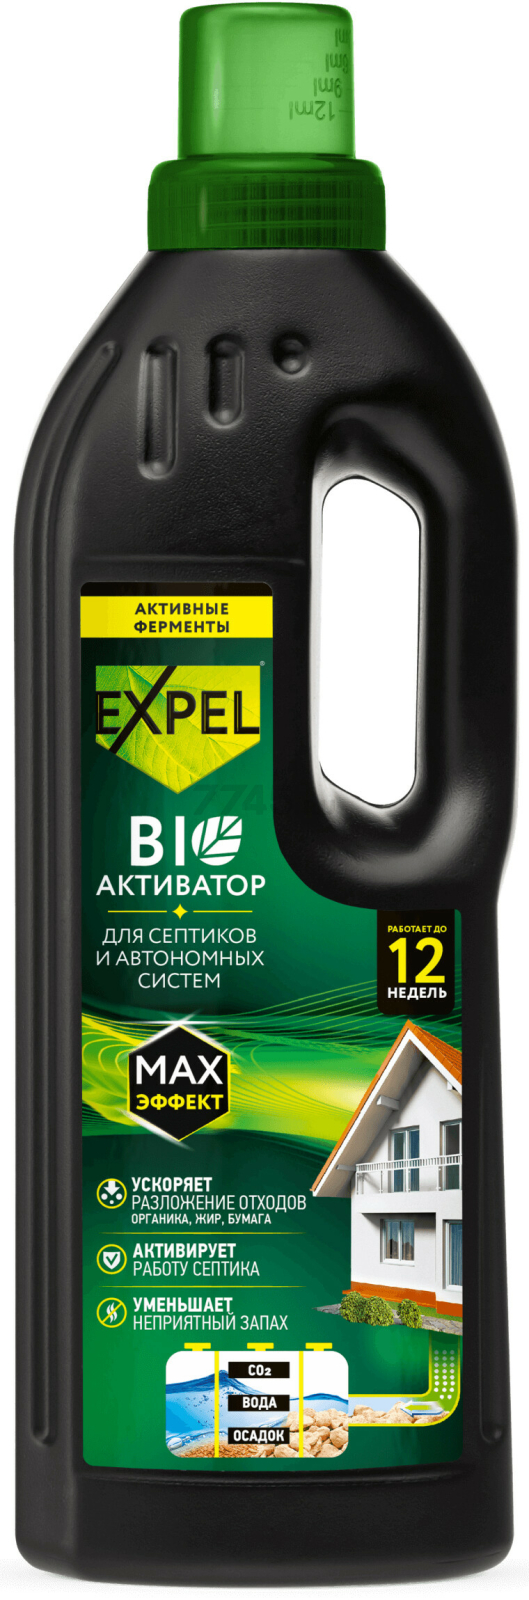 Биоактиватор для септиков EXPEL 750 мл